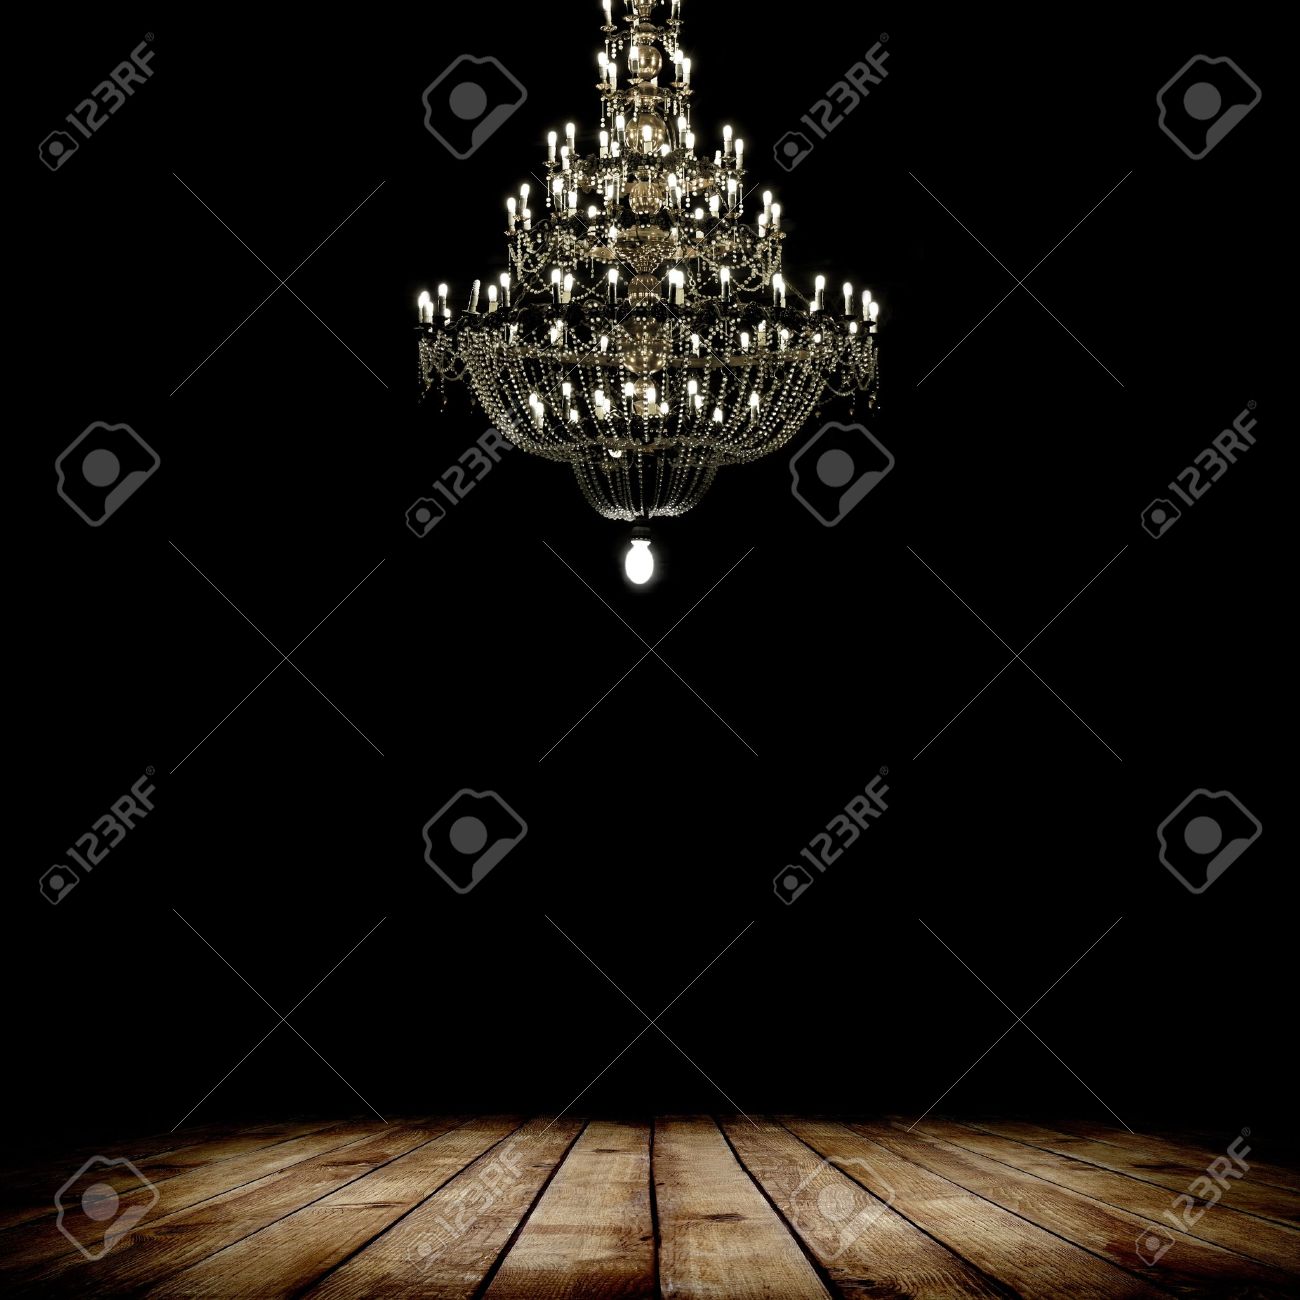 Image Of Grunge Dark Room Interior With Wood Floor And Chandelier